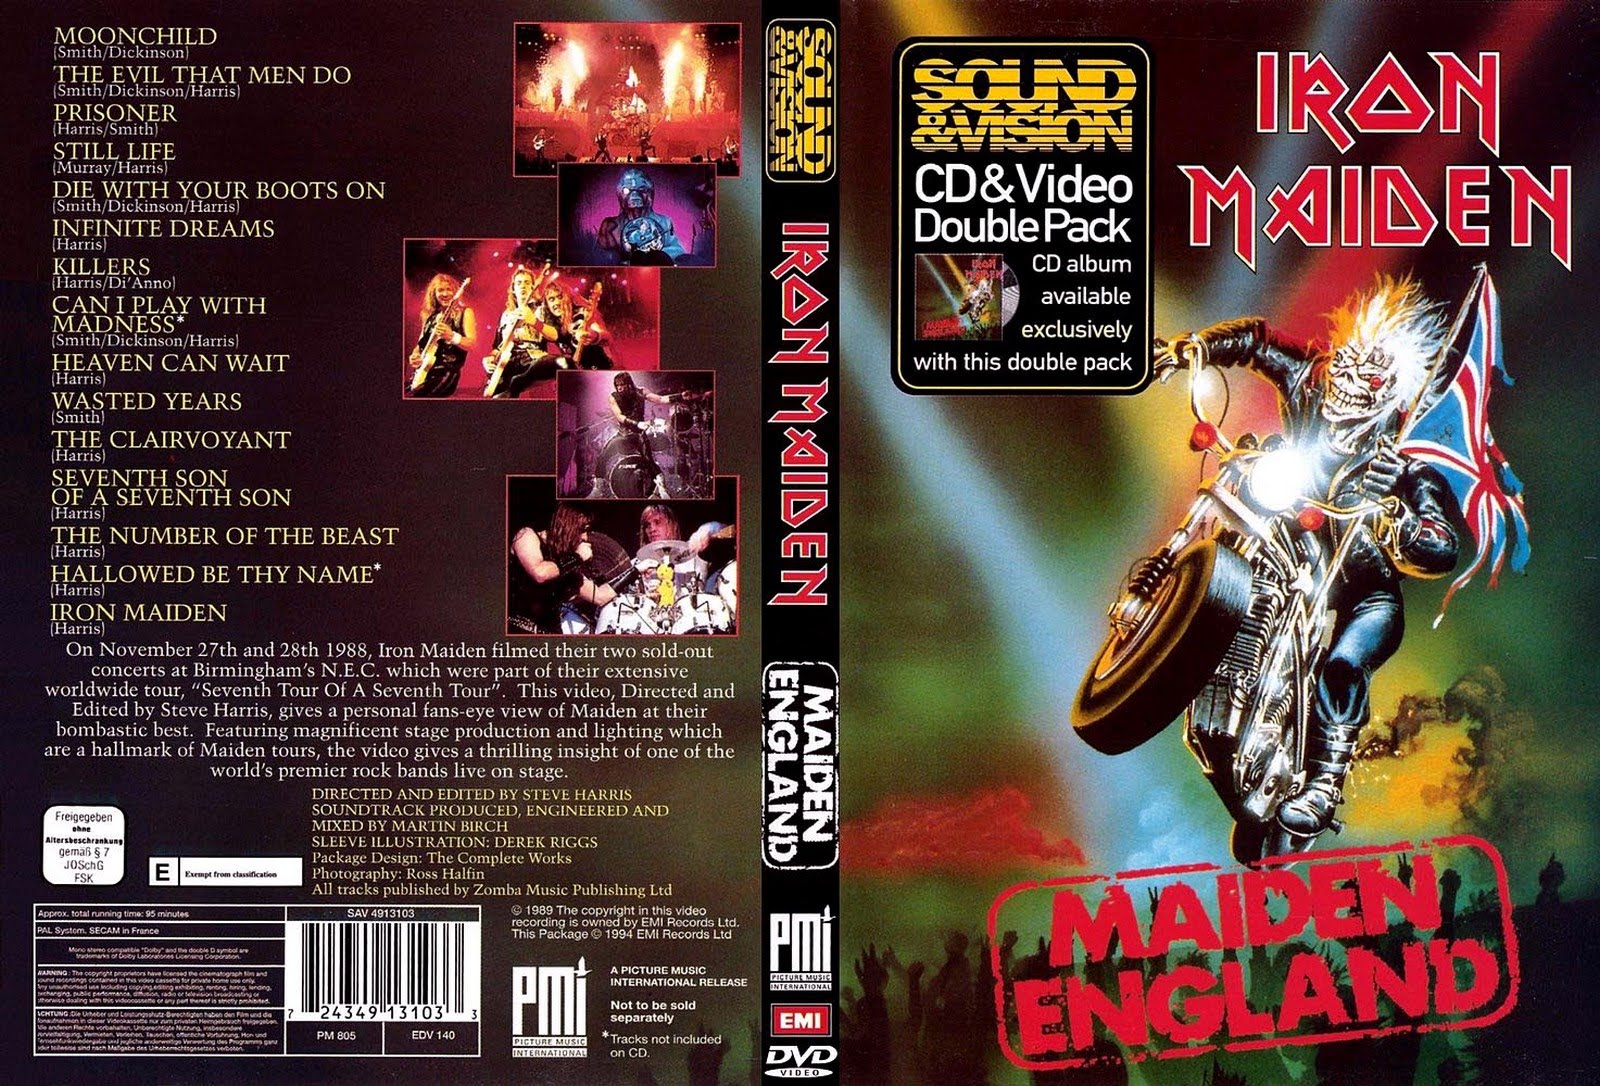 http://4.bp.blogspot.com/_brcl7Spzbn4/S-mxWJ-wAOI/AAAAAAAAAKs/aROxtjJTJ1E/s1600/Iron-Maiden-Maiden-England.jpg